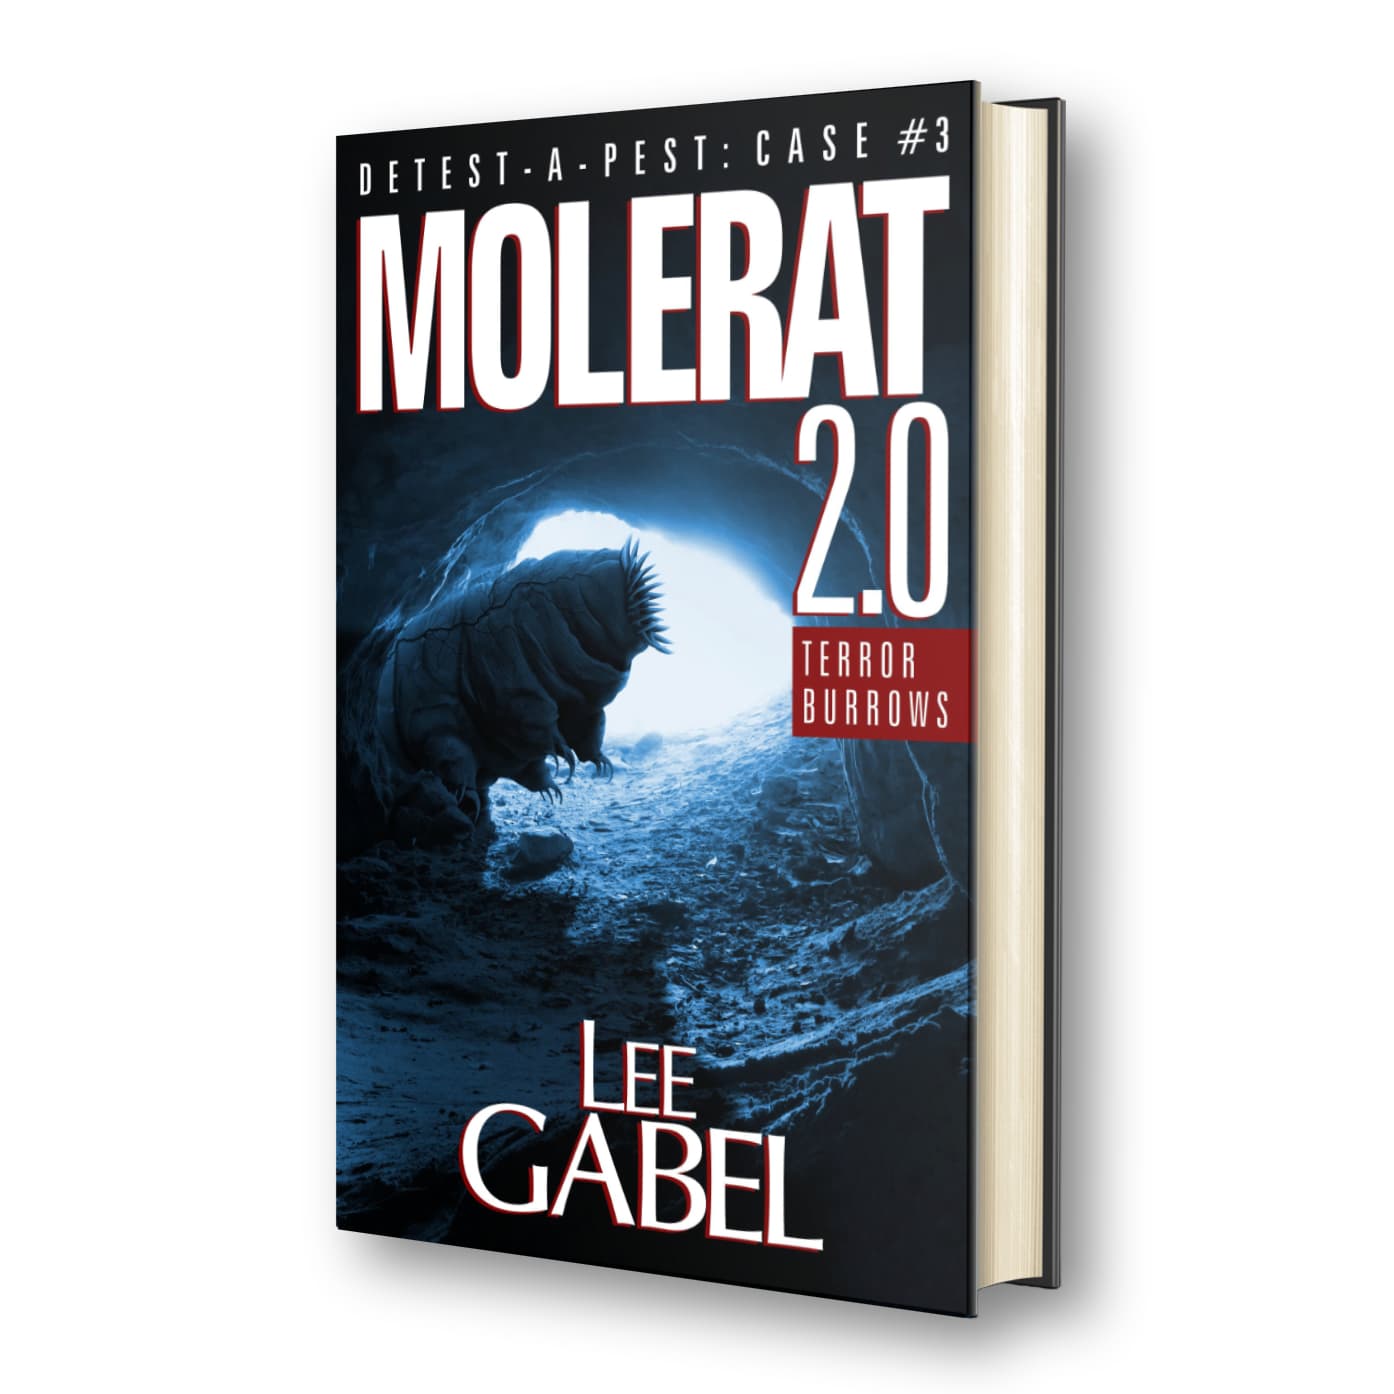 Molerat 2.0 virtual hardcover image (346 pages.)